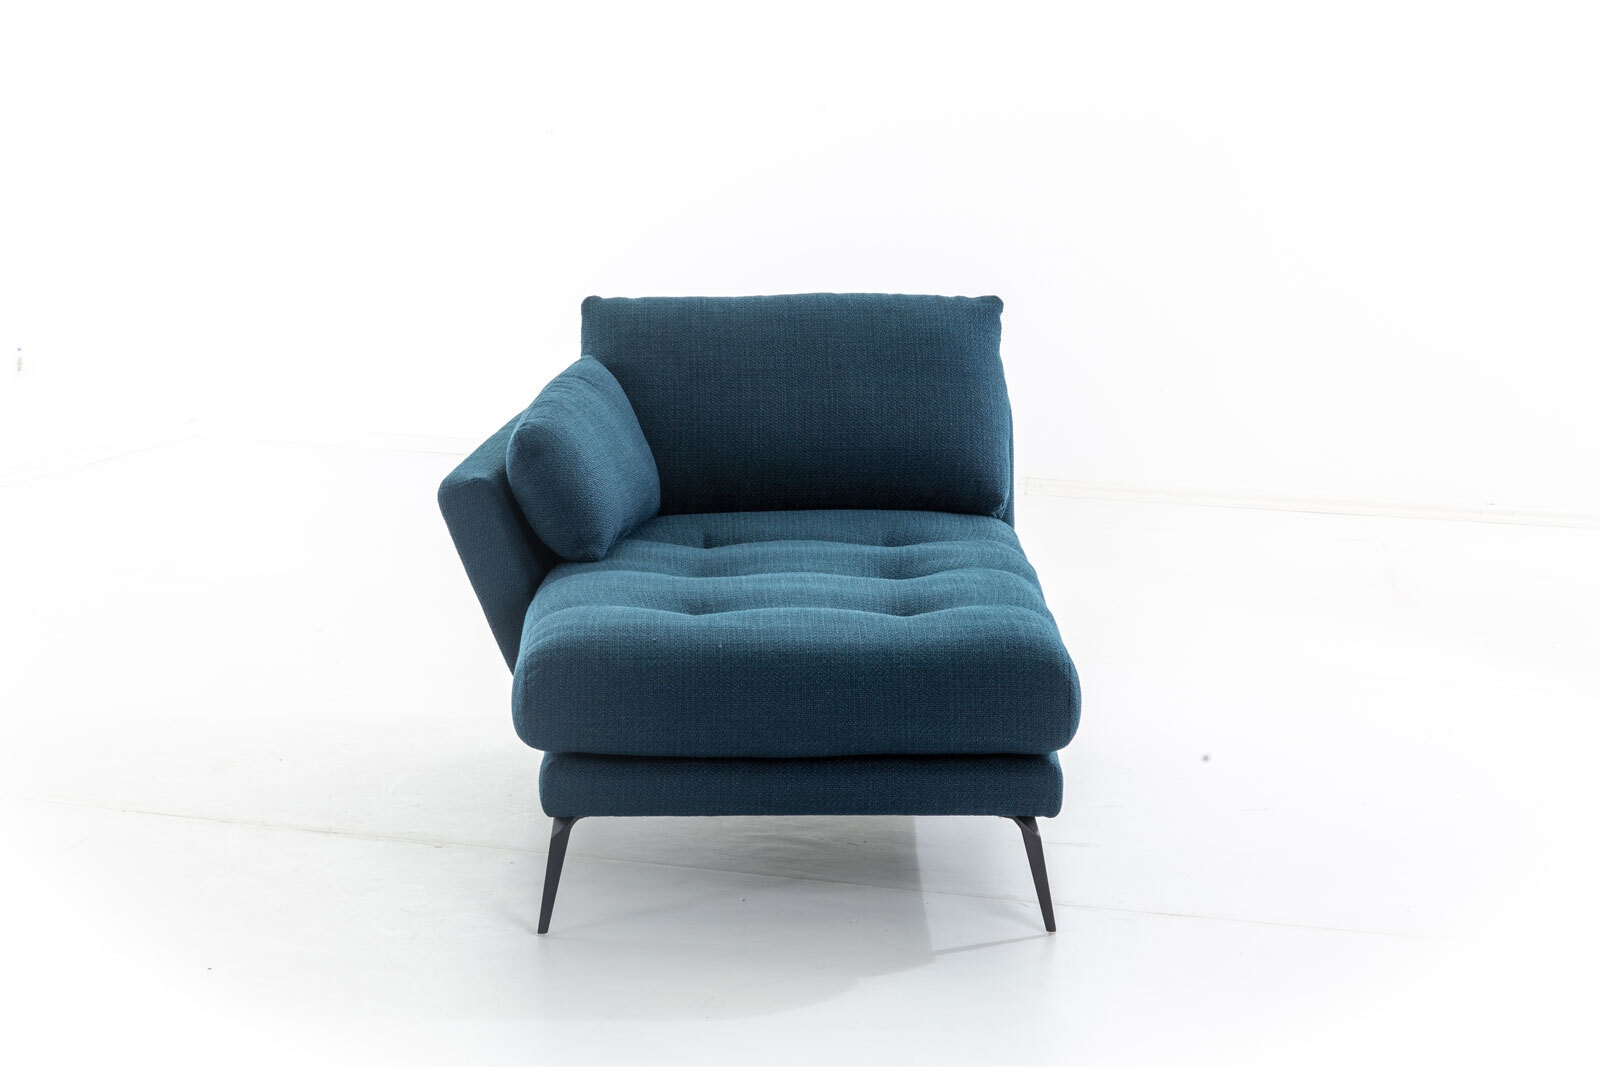 die sofamanufaktur Longchair L Stoffbezug 106 x 79 x 168 cm blue